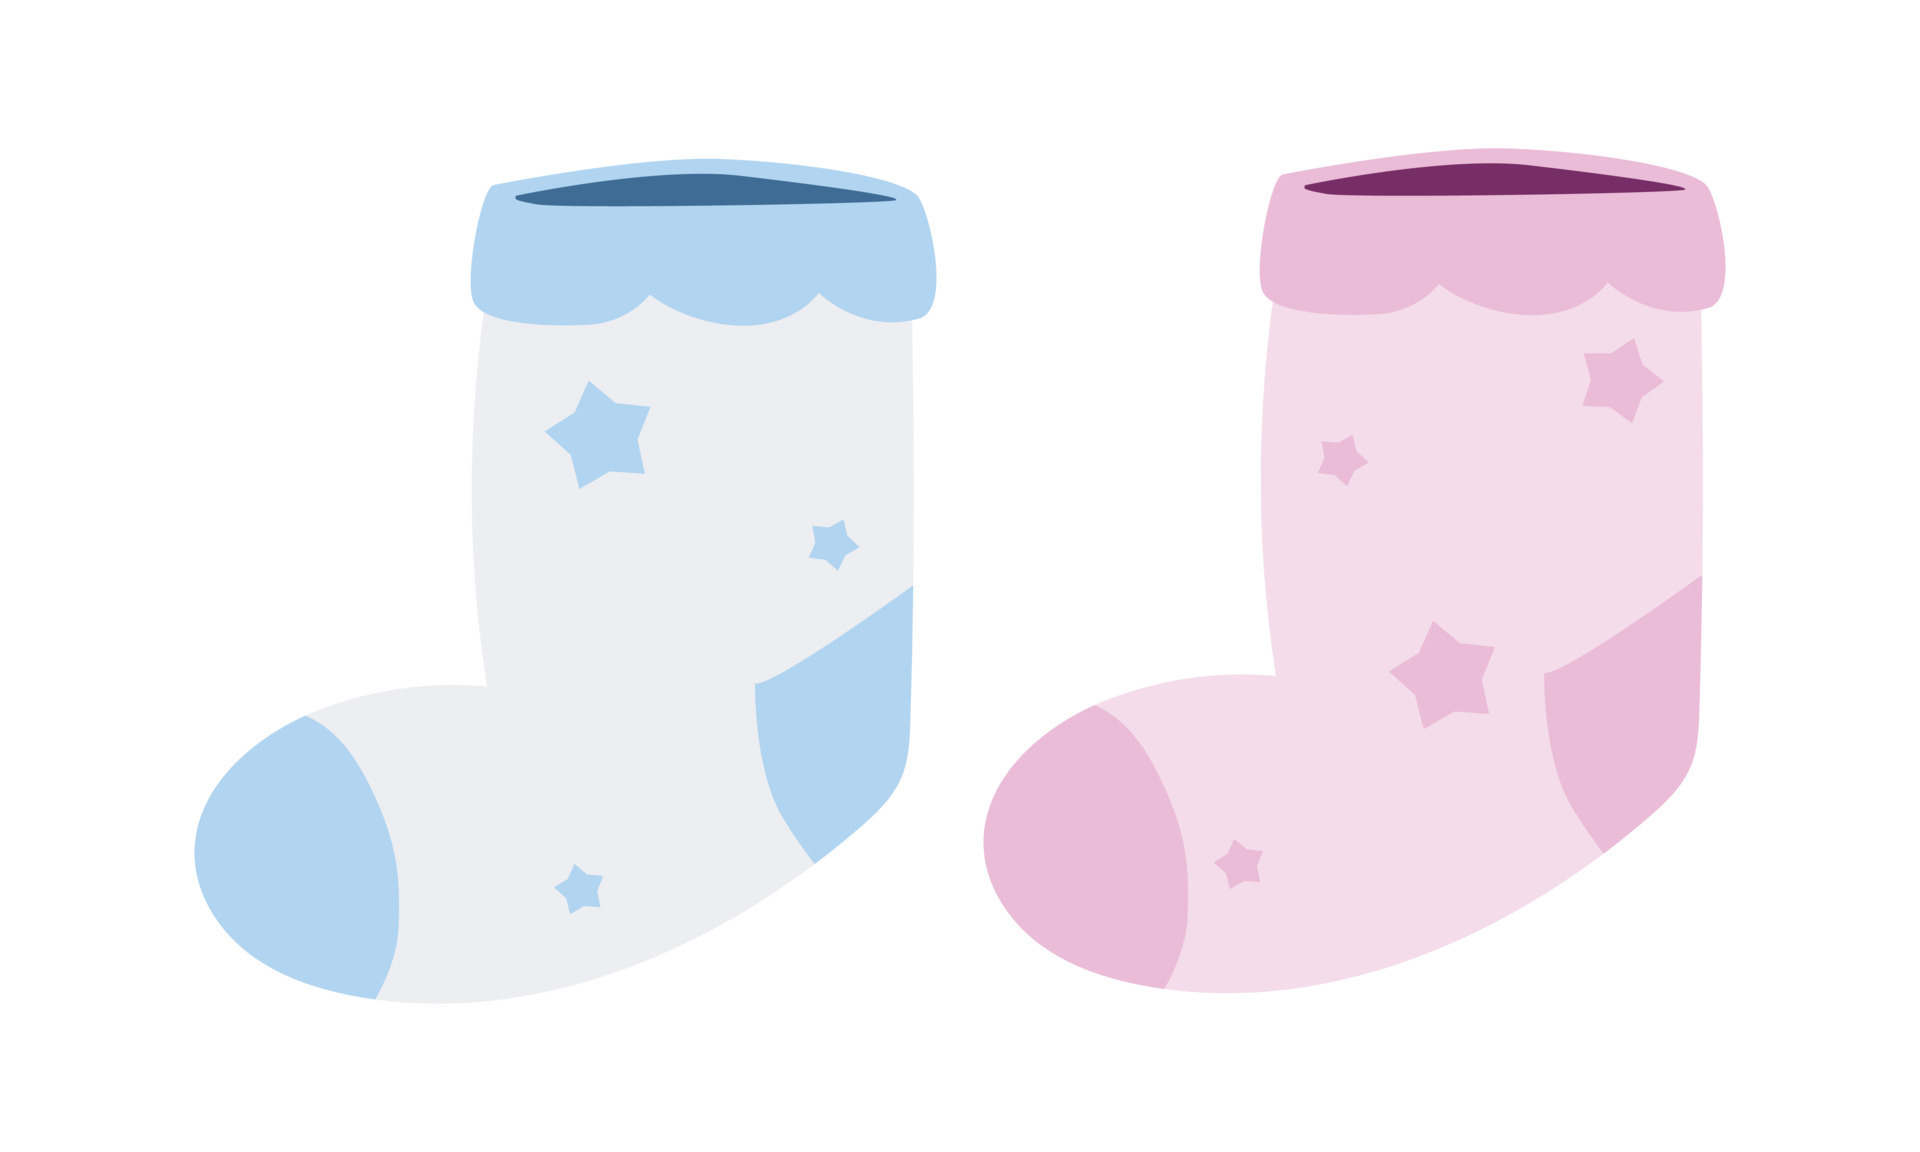 Premium Vector  Baby shower watercolor baby socks vector illustration